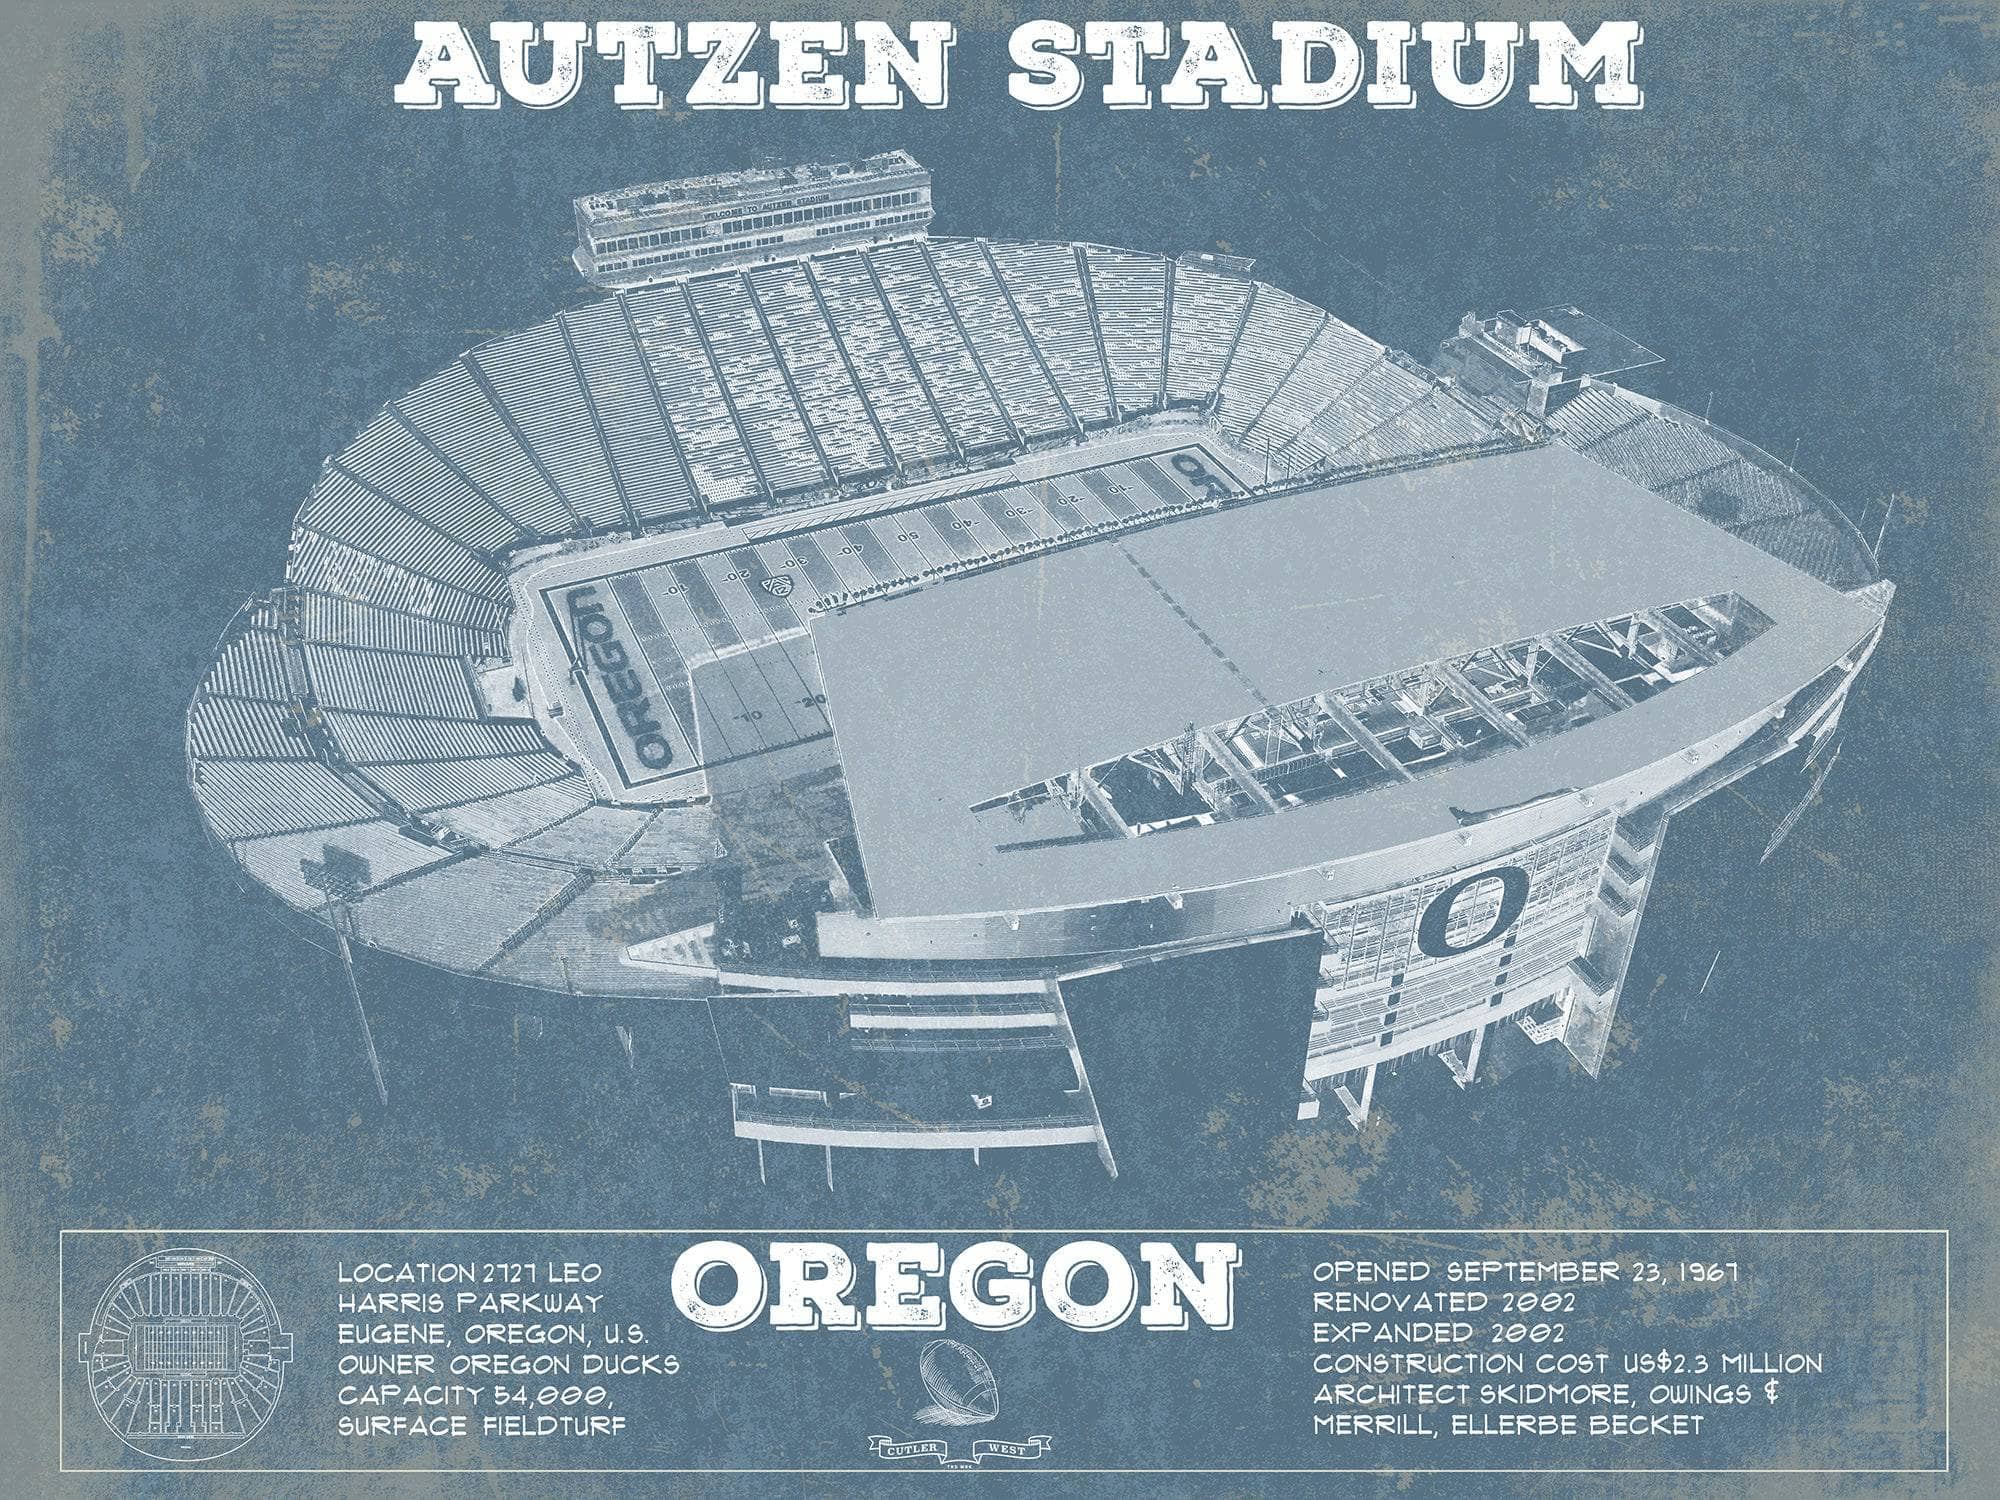 Cutler West College Football Collection 14" x 11" / Unframed Vintage Autzen Stadium - Oregon Ducks Football Print 704763872-14"-x-11"35801